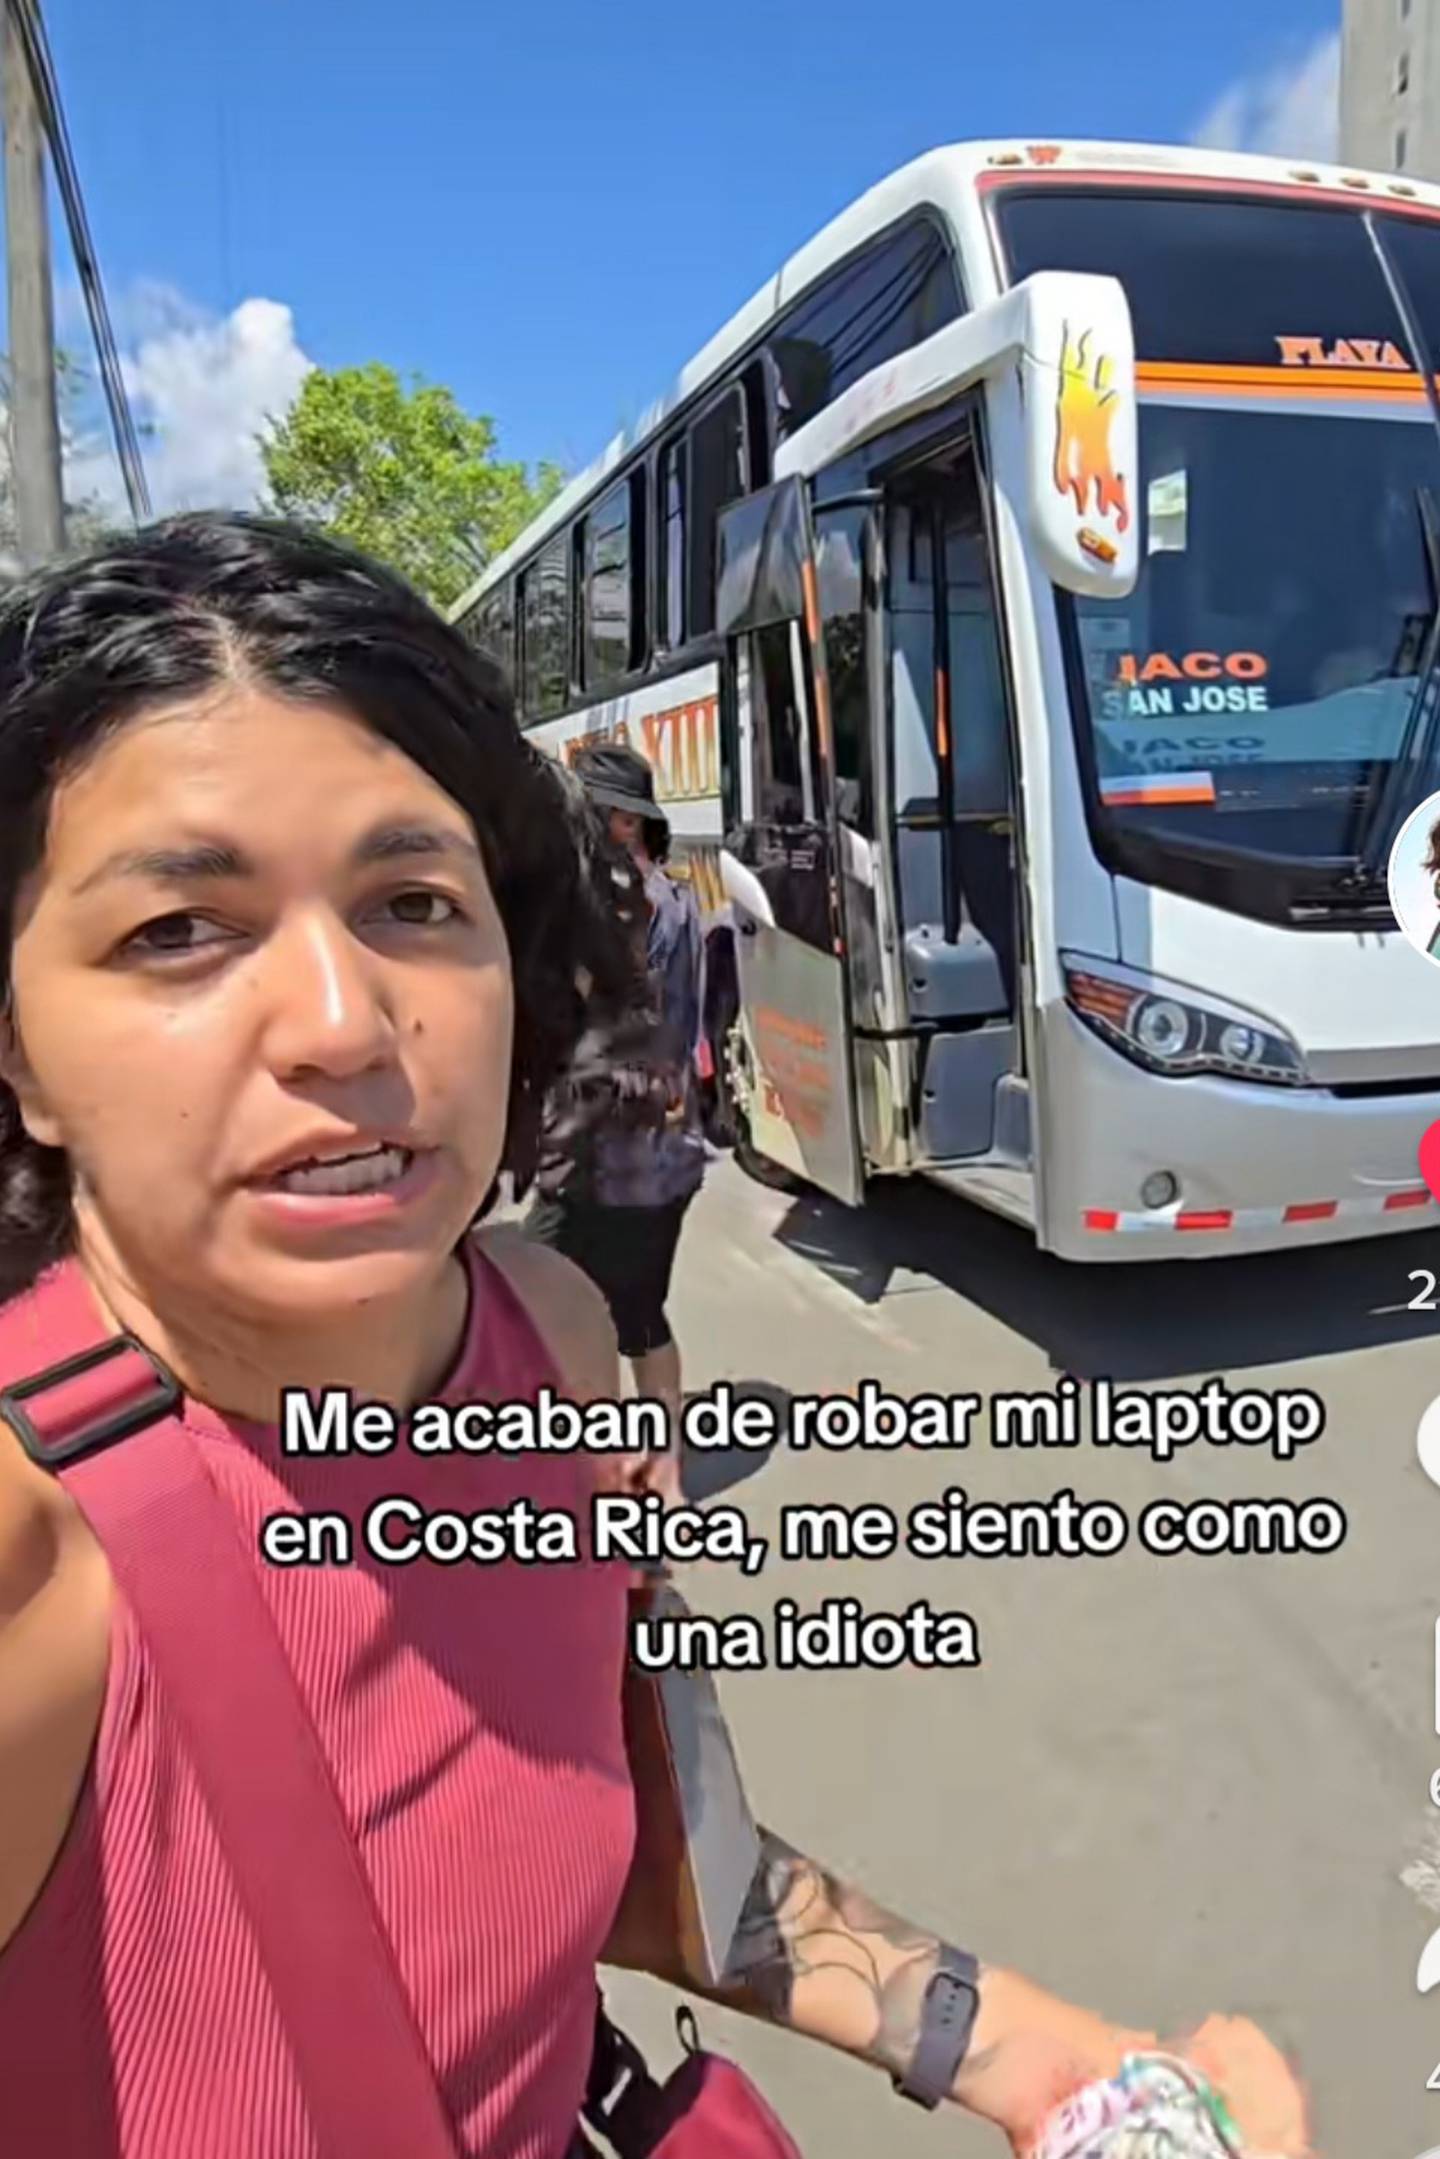 Natasha, de hola, yo soy Natasha, robo en Costa Rica Jacó